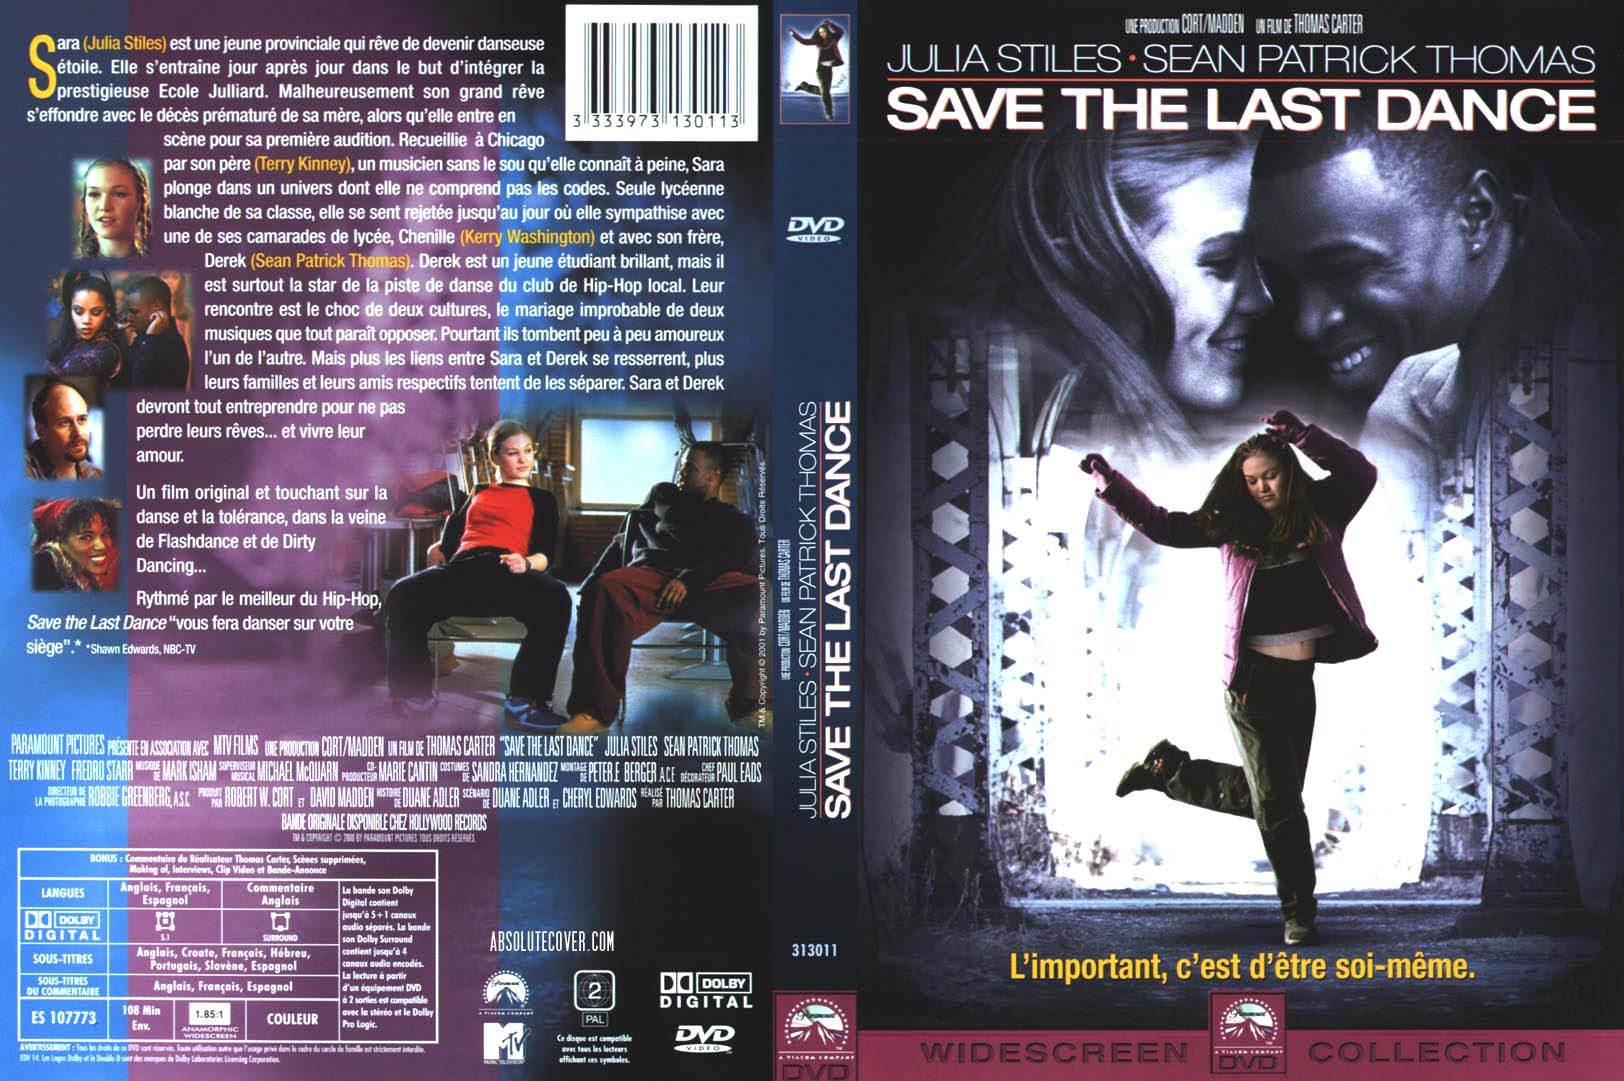 Save the last dance (v2)